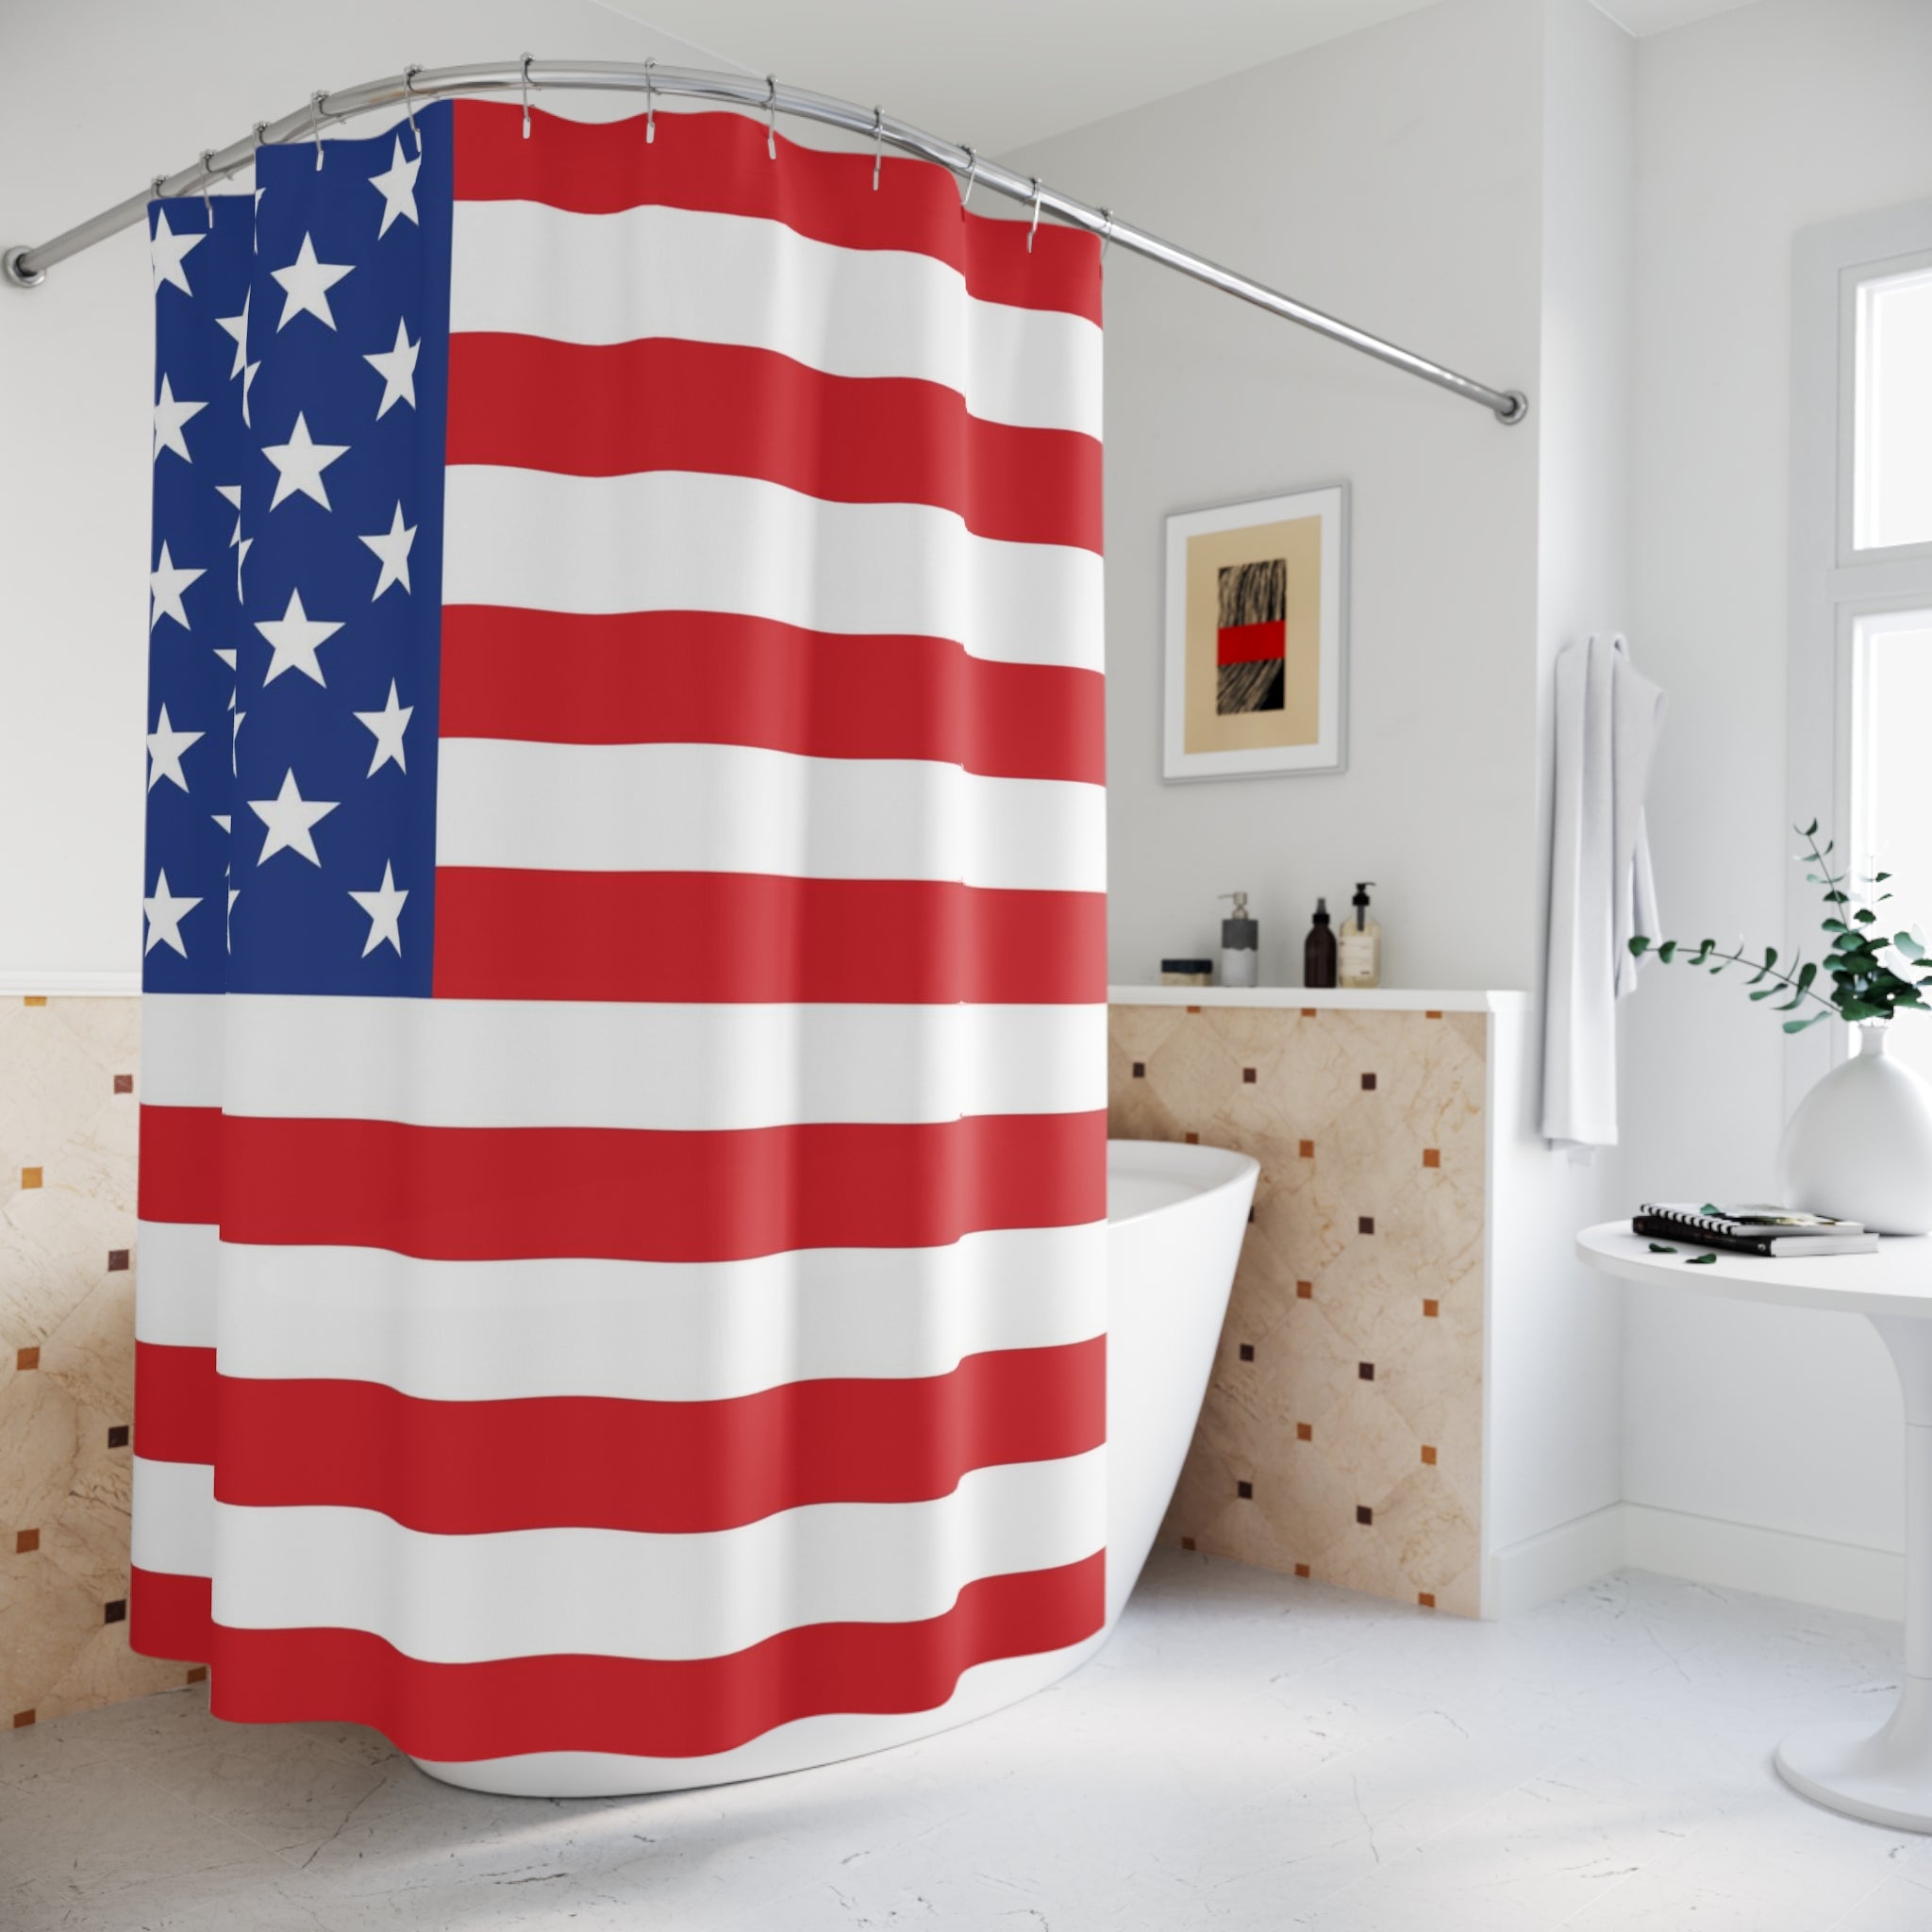 USA Polyester Shower Curtain - MG Bath Products USA flag on shower curtain.Home Decor